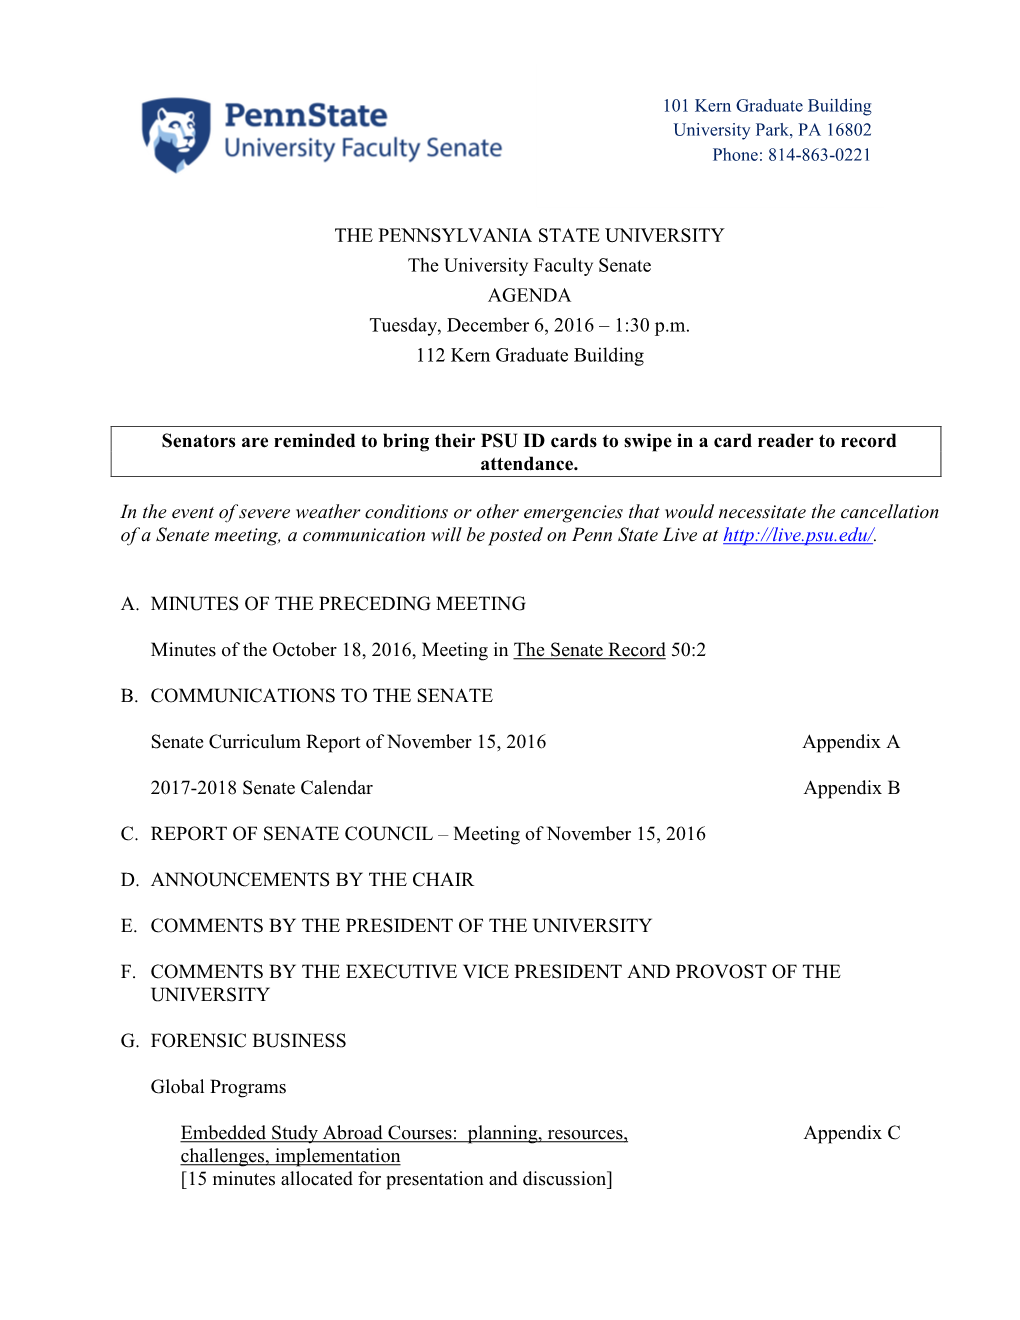 THE PENNSYLVANIA STATE UNIVERSITY the University Faculty Senate AGENDA Tuesday, December 6, 2016 – 1:30 P.M